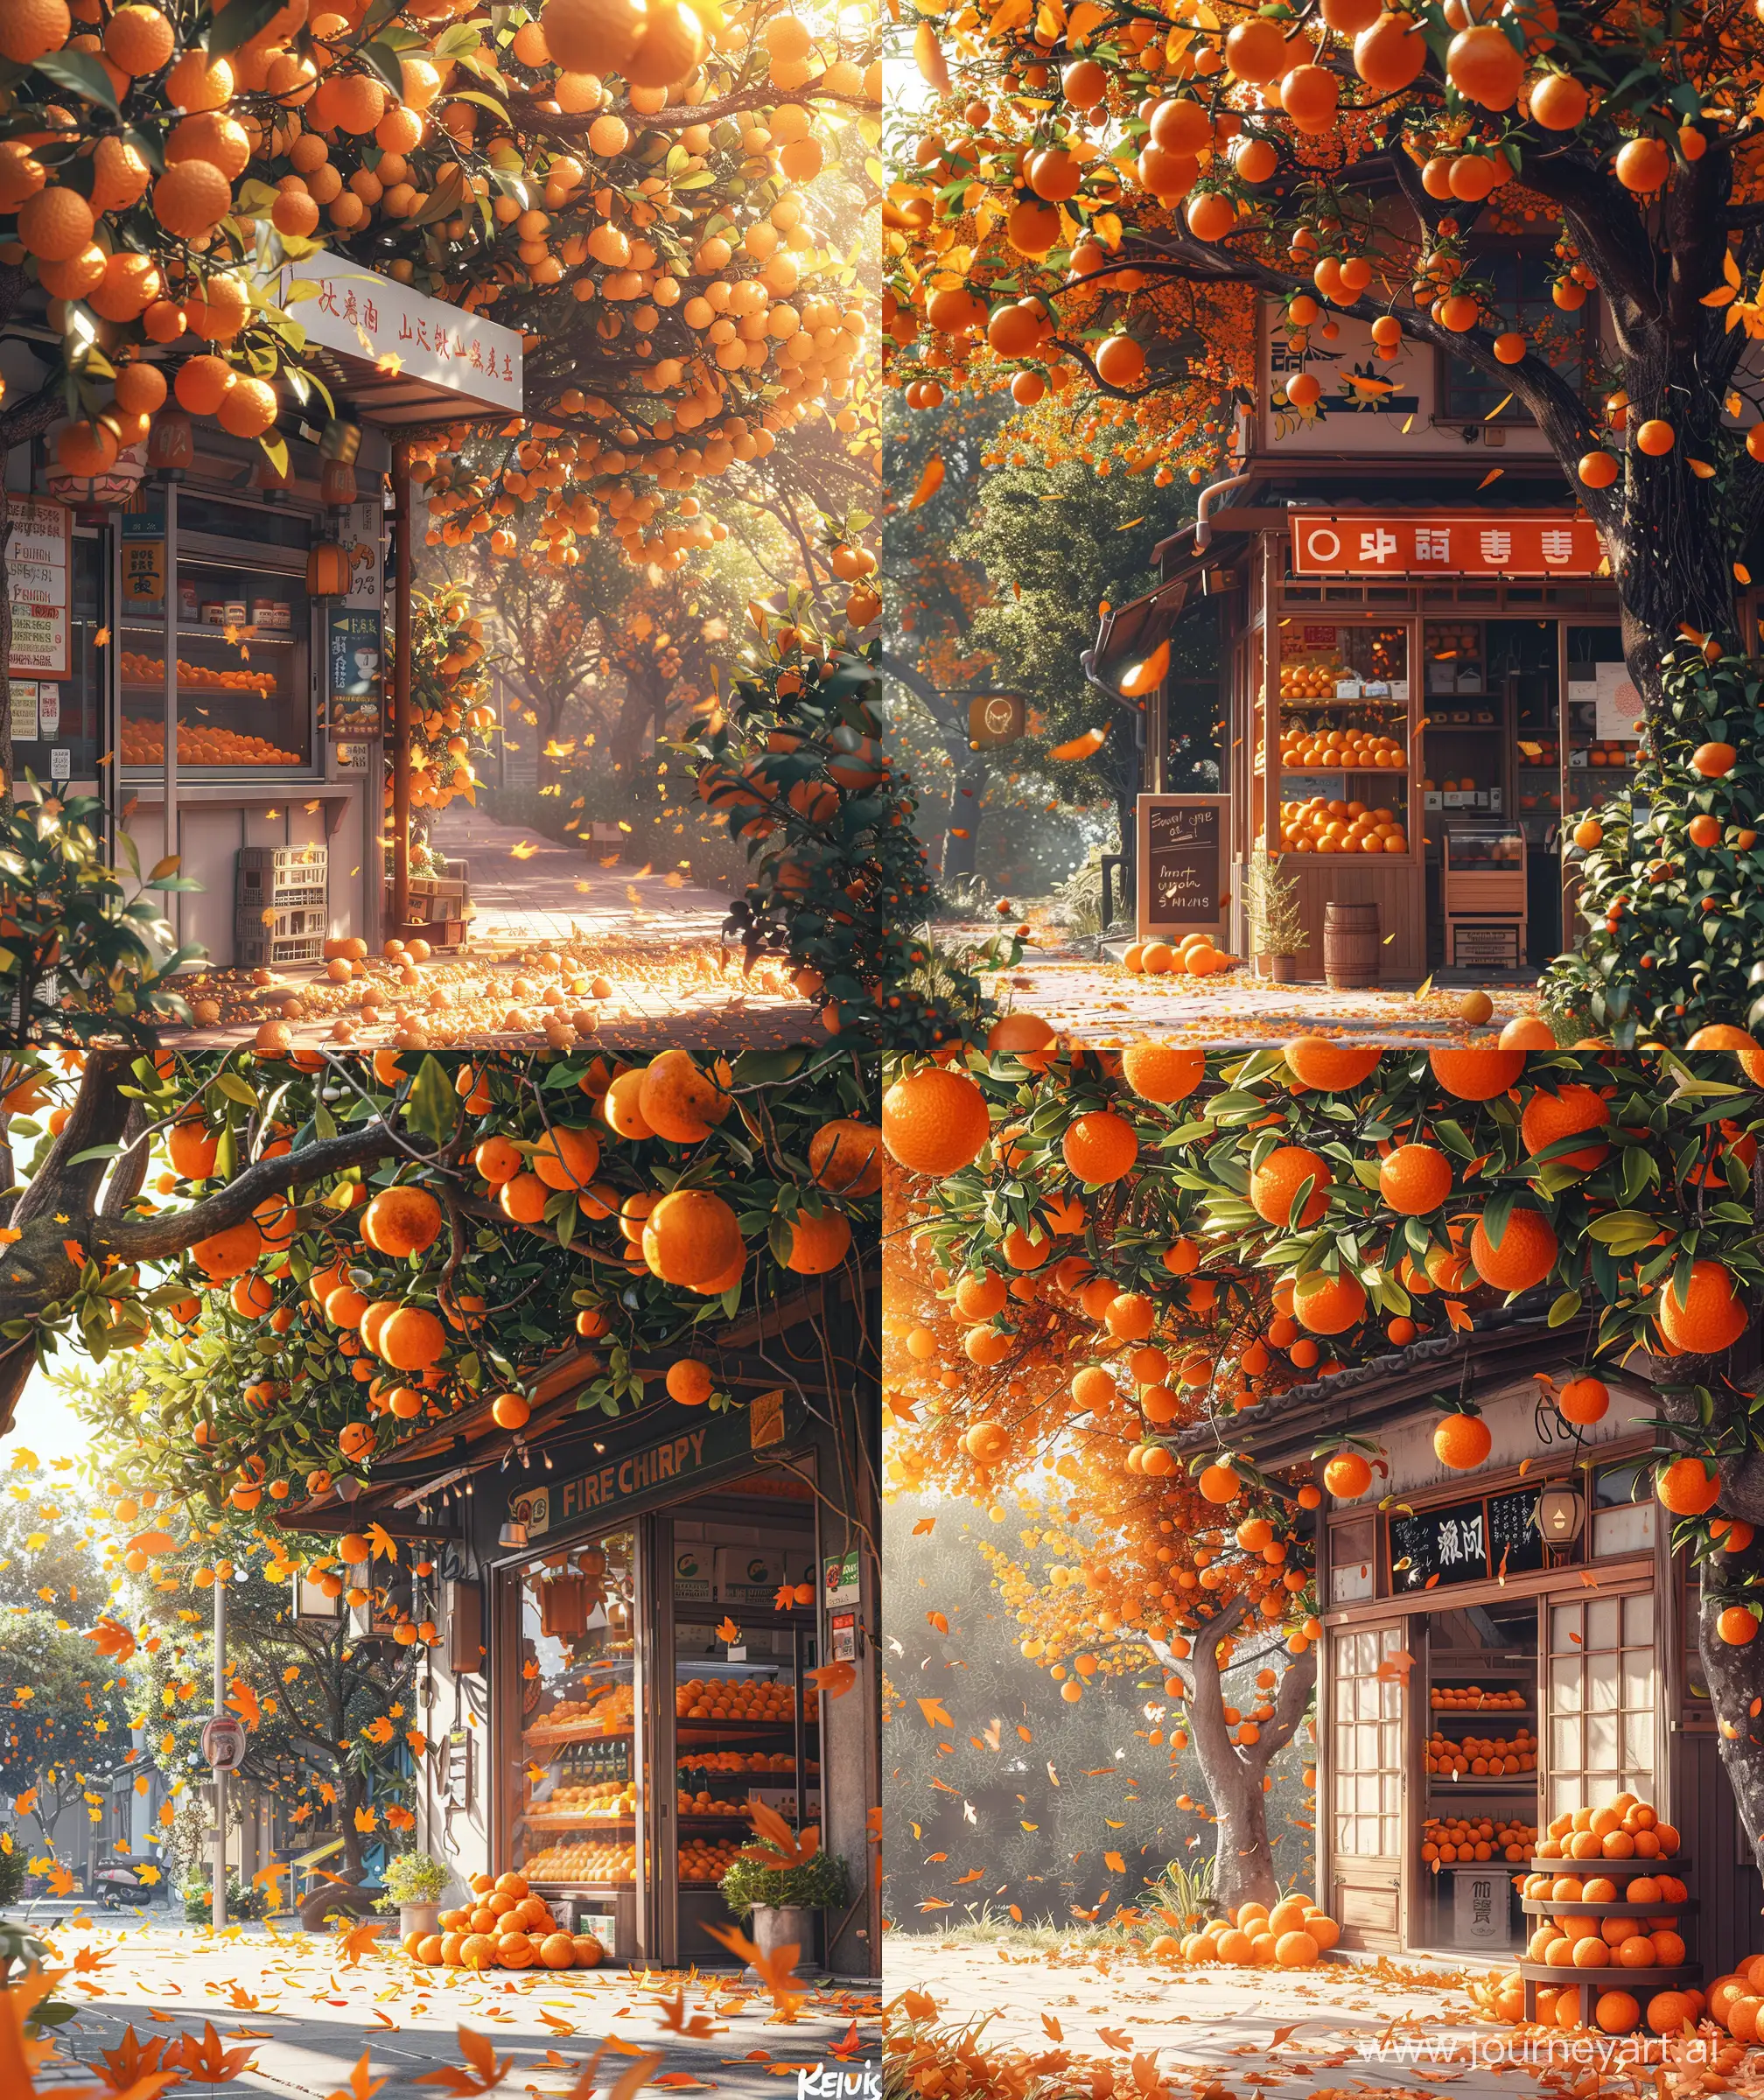 GhibliStyle-Anime-Morning-Aesthetic-Fruit-Shop-with-Ripe-Orange-Trees